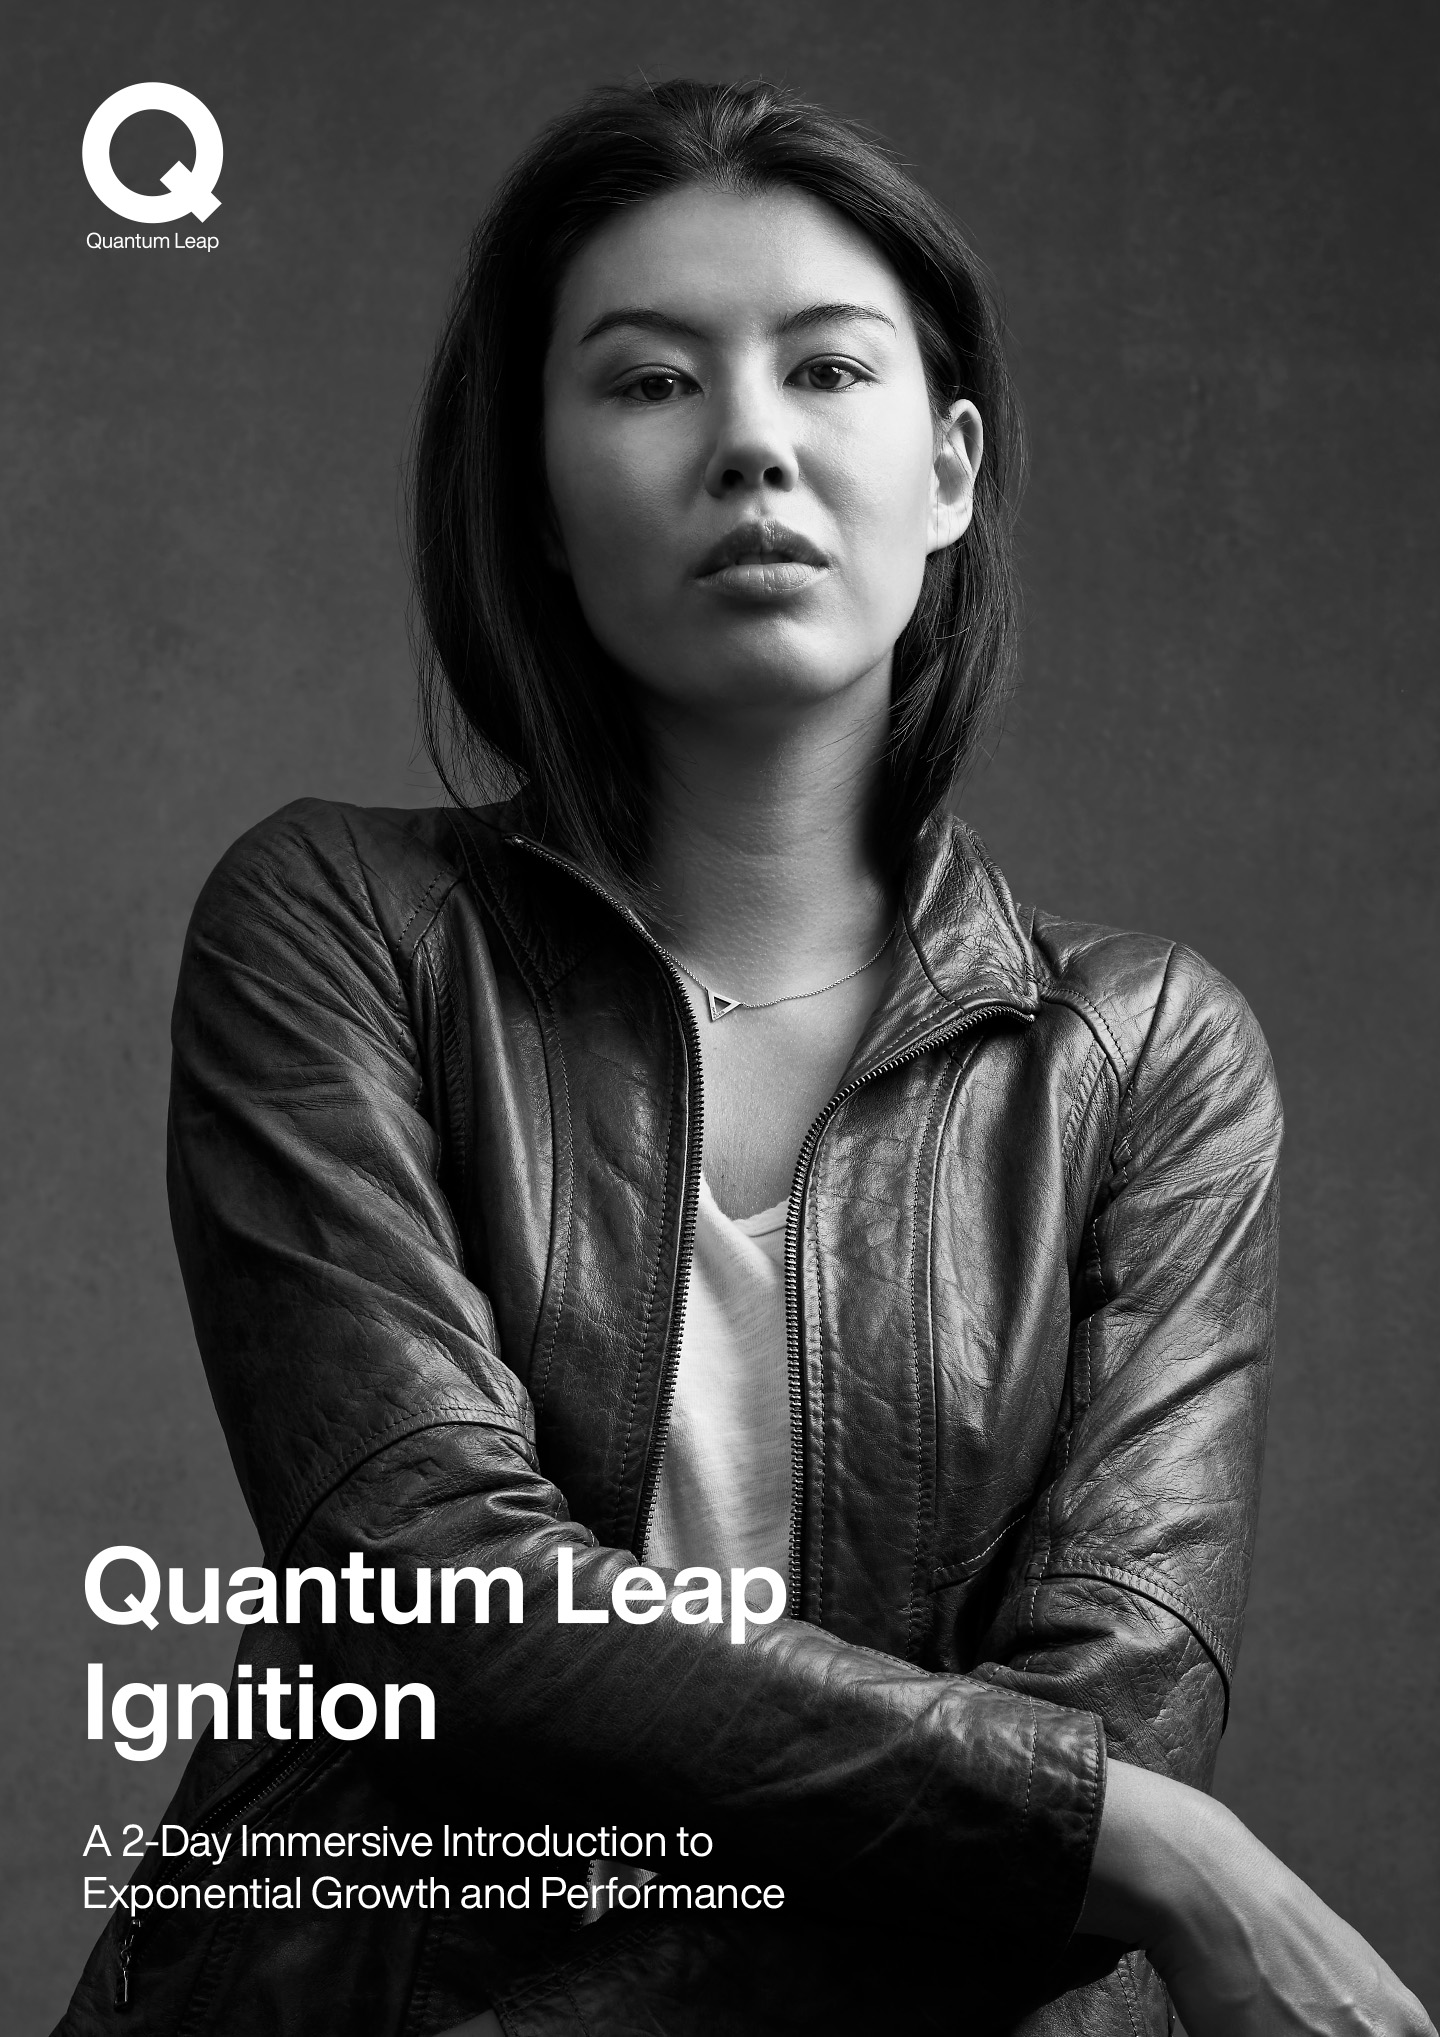 Quantum Leap Accelerator Thumbnail